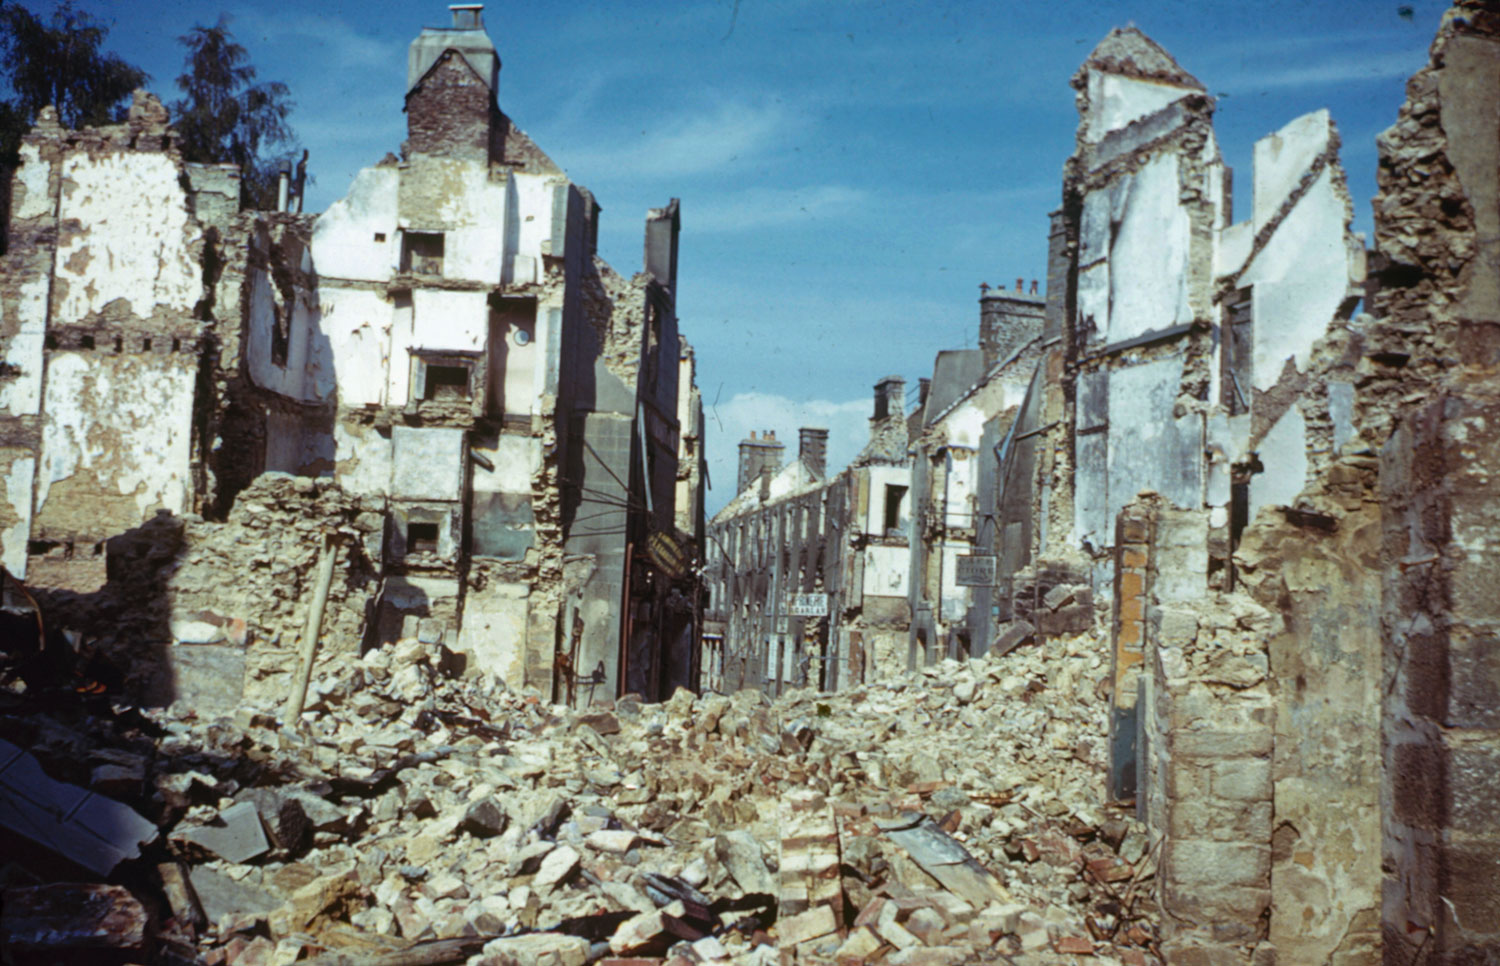 Destroyed town in northwest France, summer 1944.